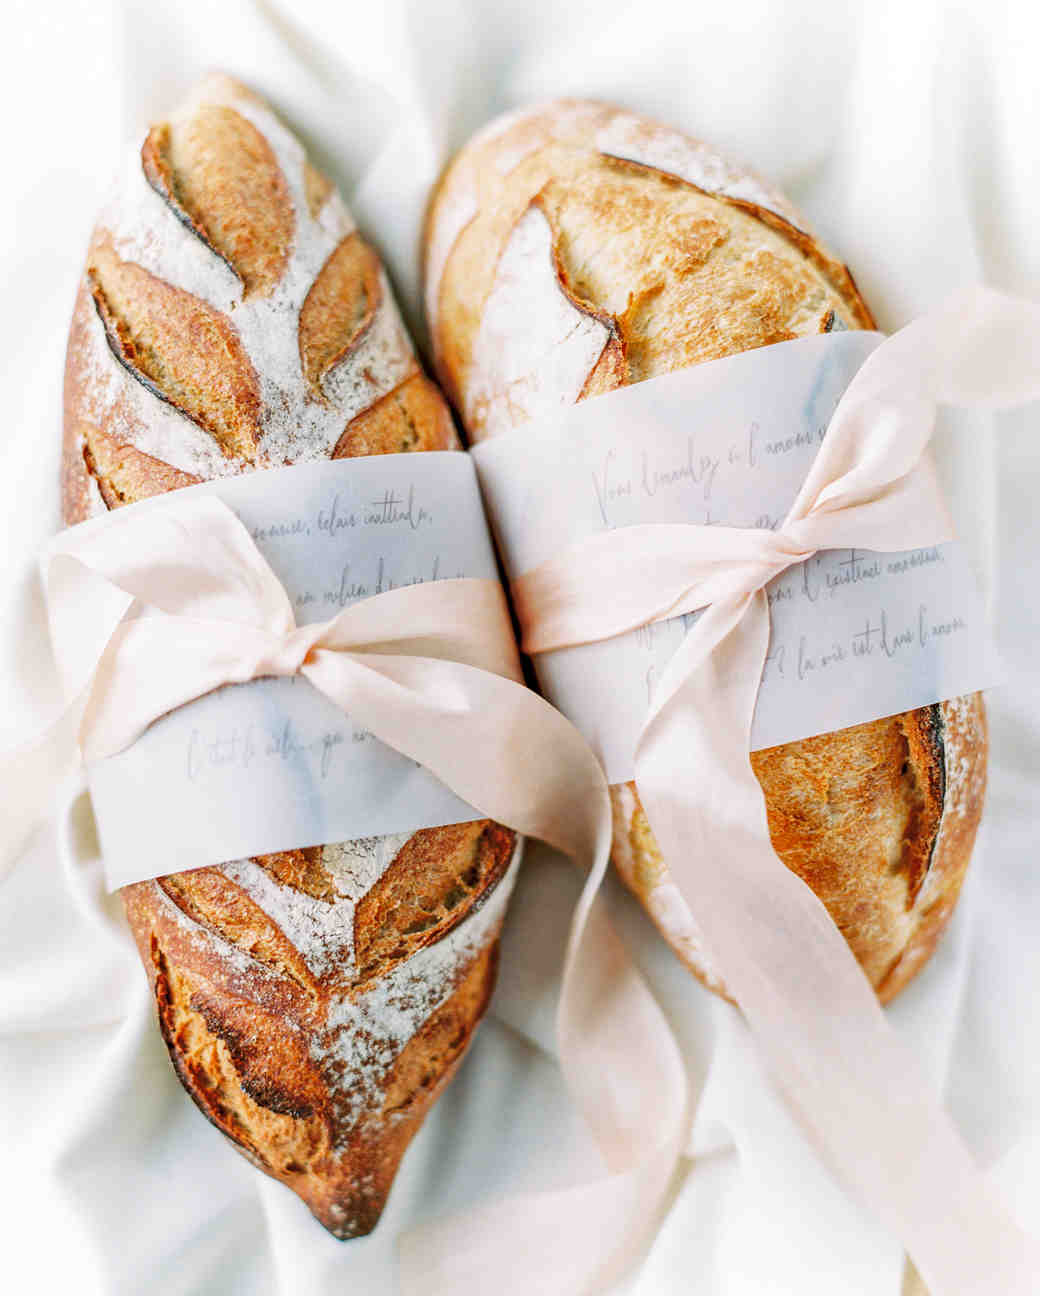 27 креативных способов подачи хлеба на свадьбу